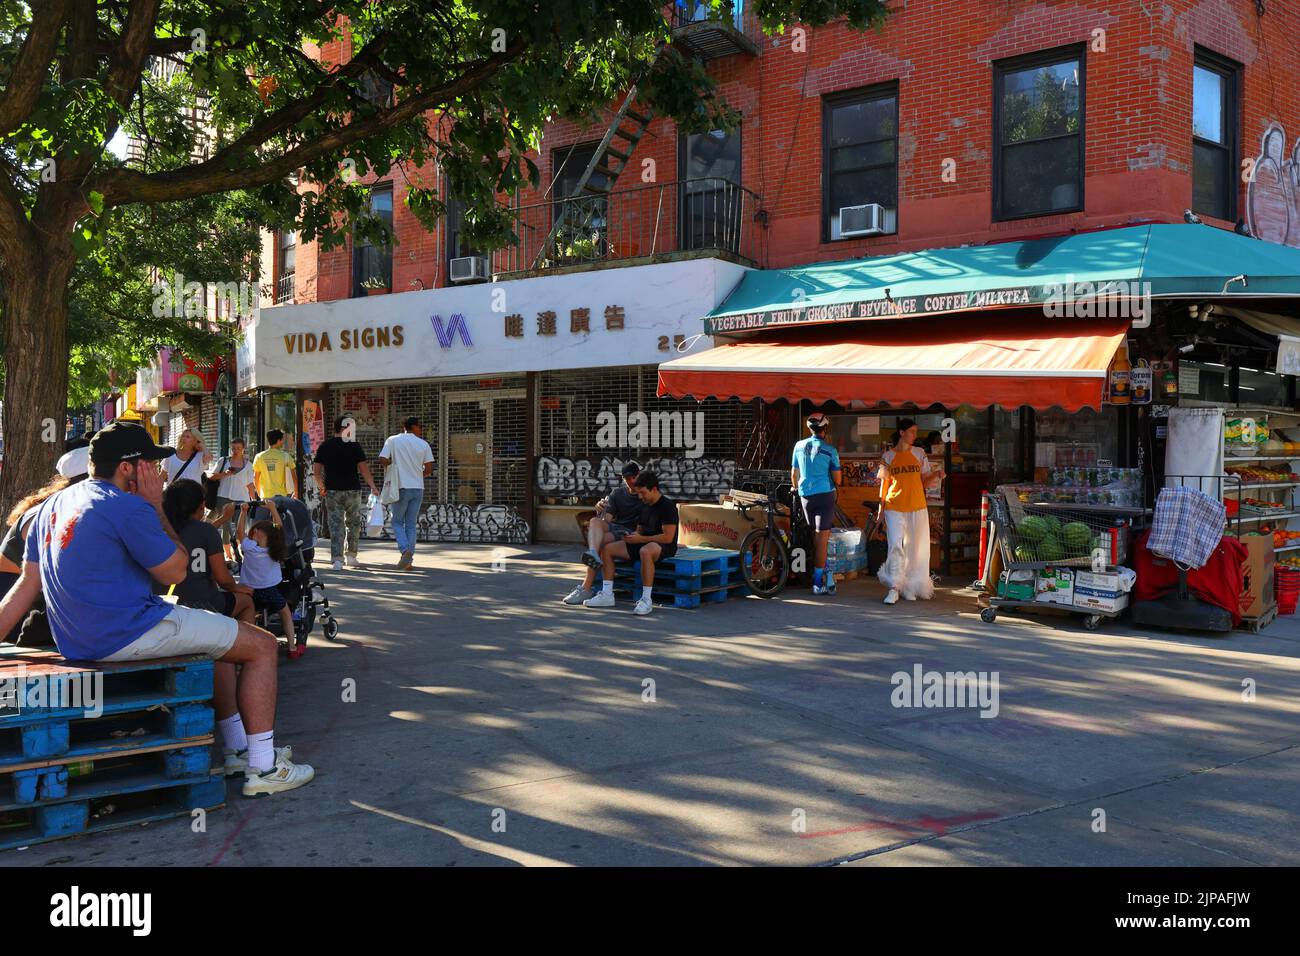 Le persone in attesa di ordini di bevande presso L'A & N Fruit Store, 25 Canal St, New York, a Chinatown 'Dimes Square' di Manhattan/Lower East Side. Foto Stock